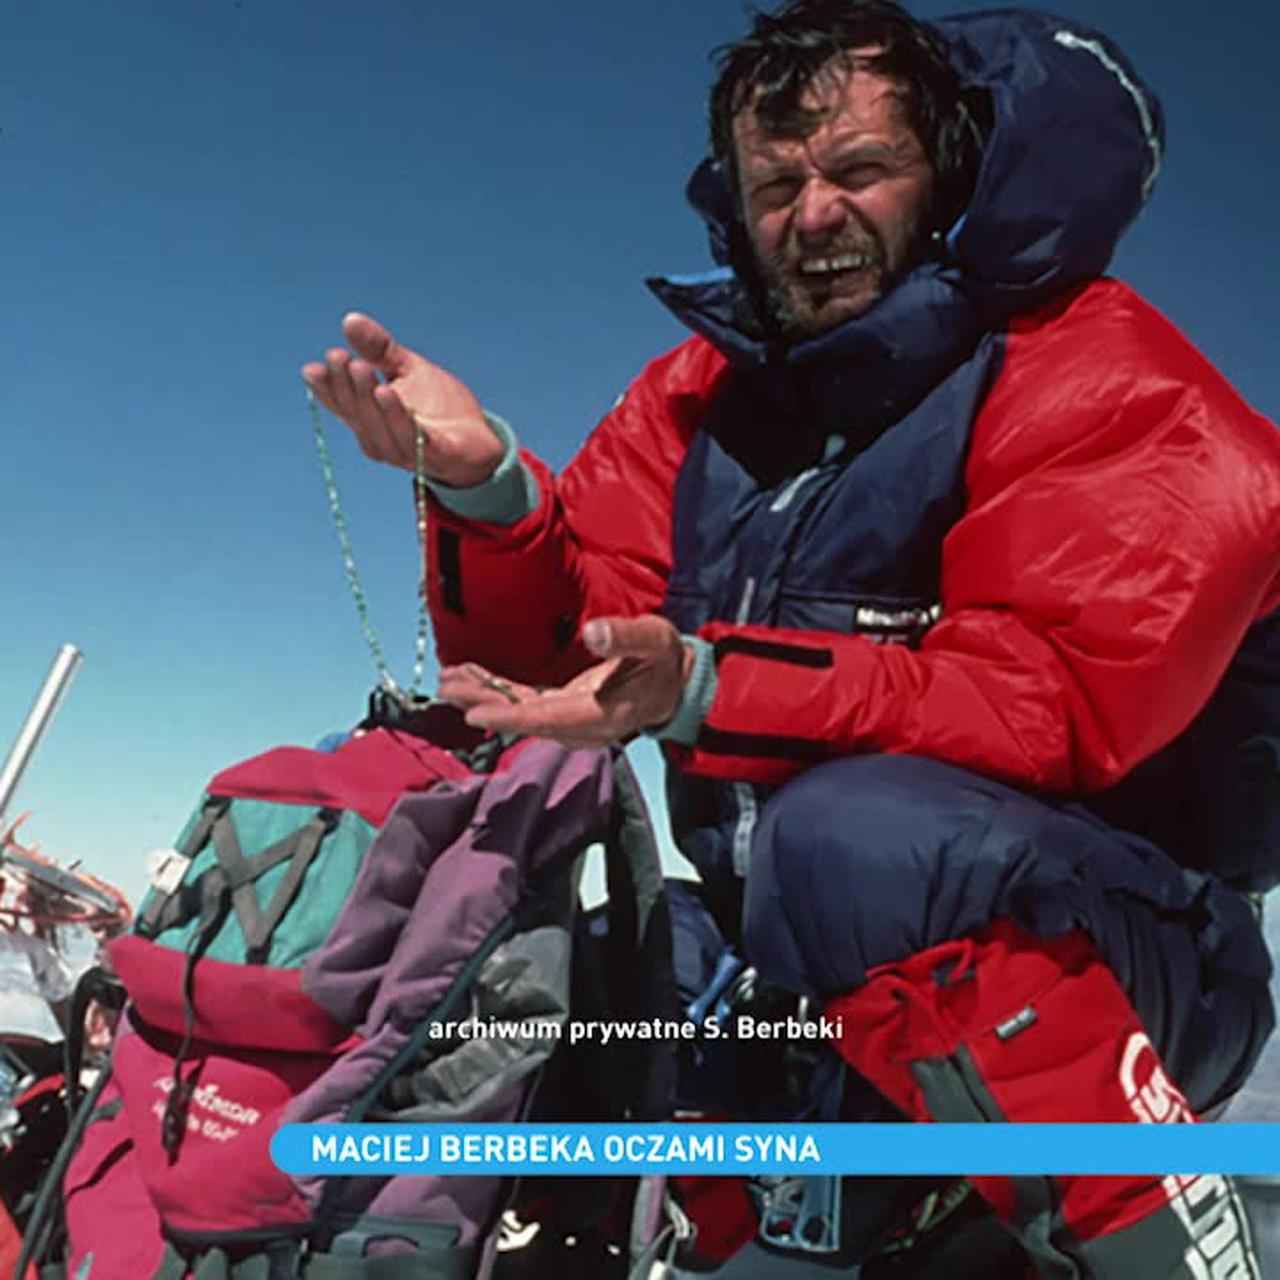 mountain climber Maciej Berbeka